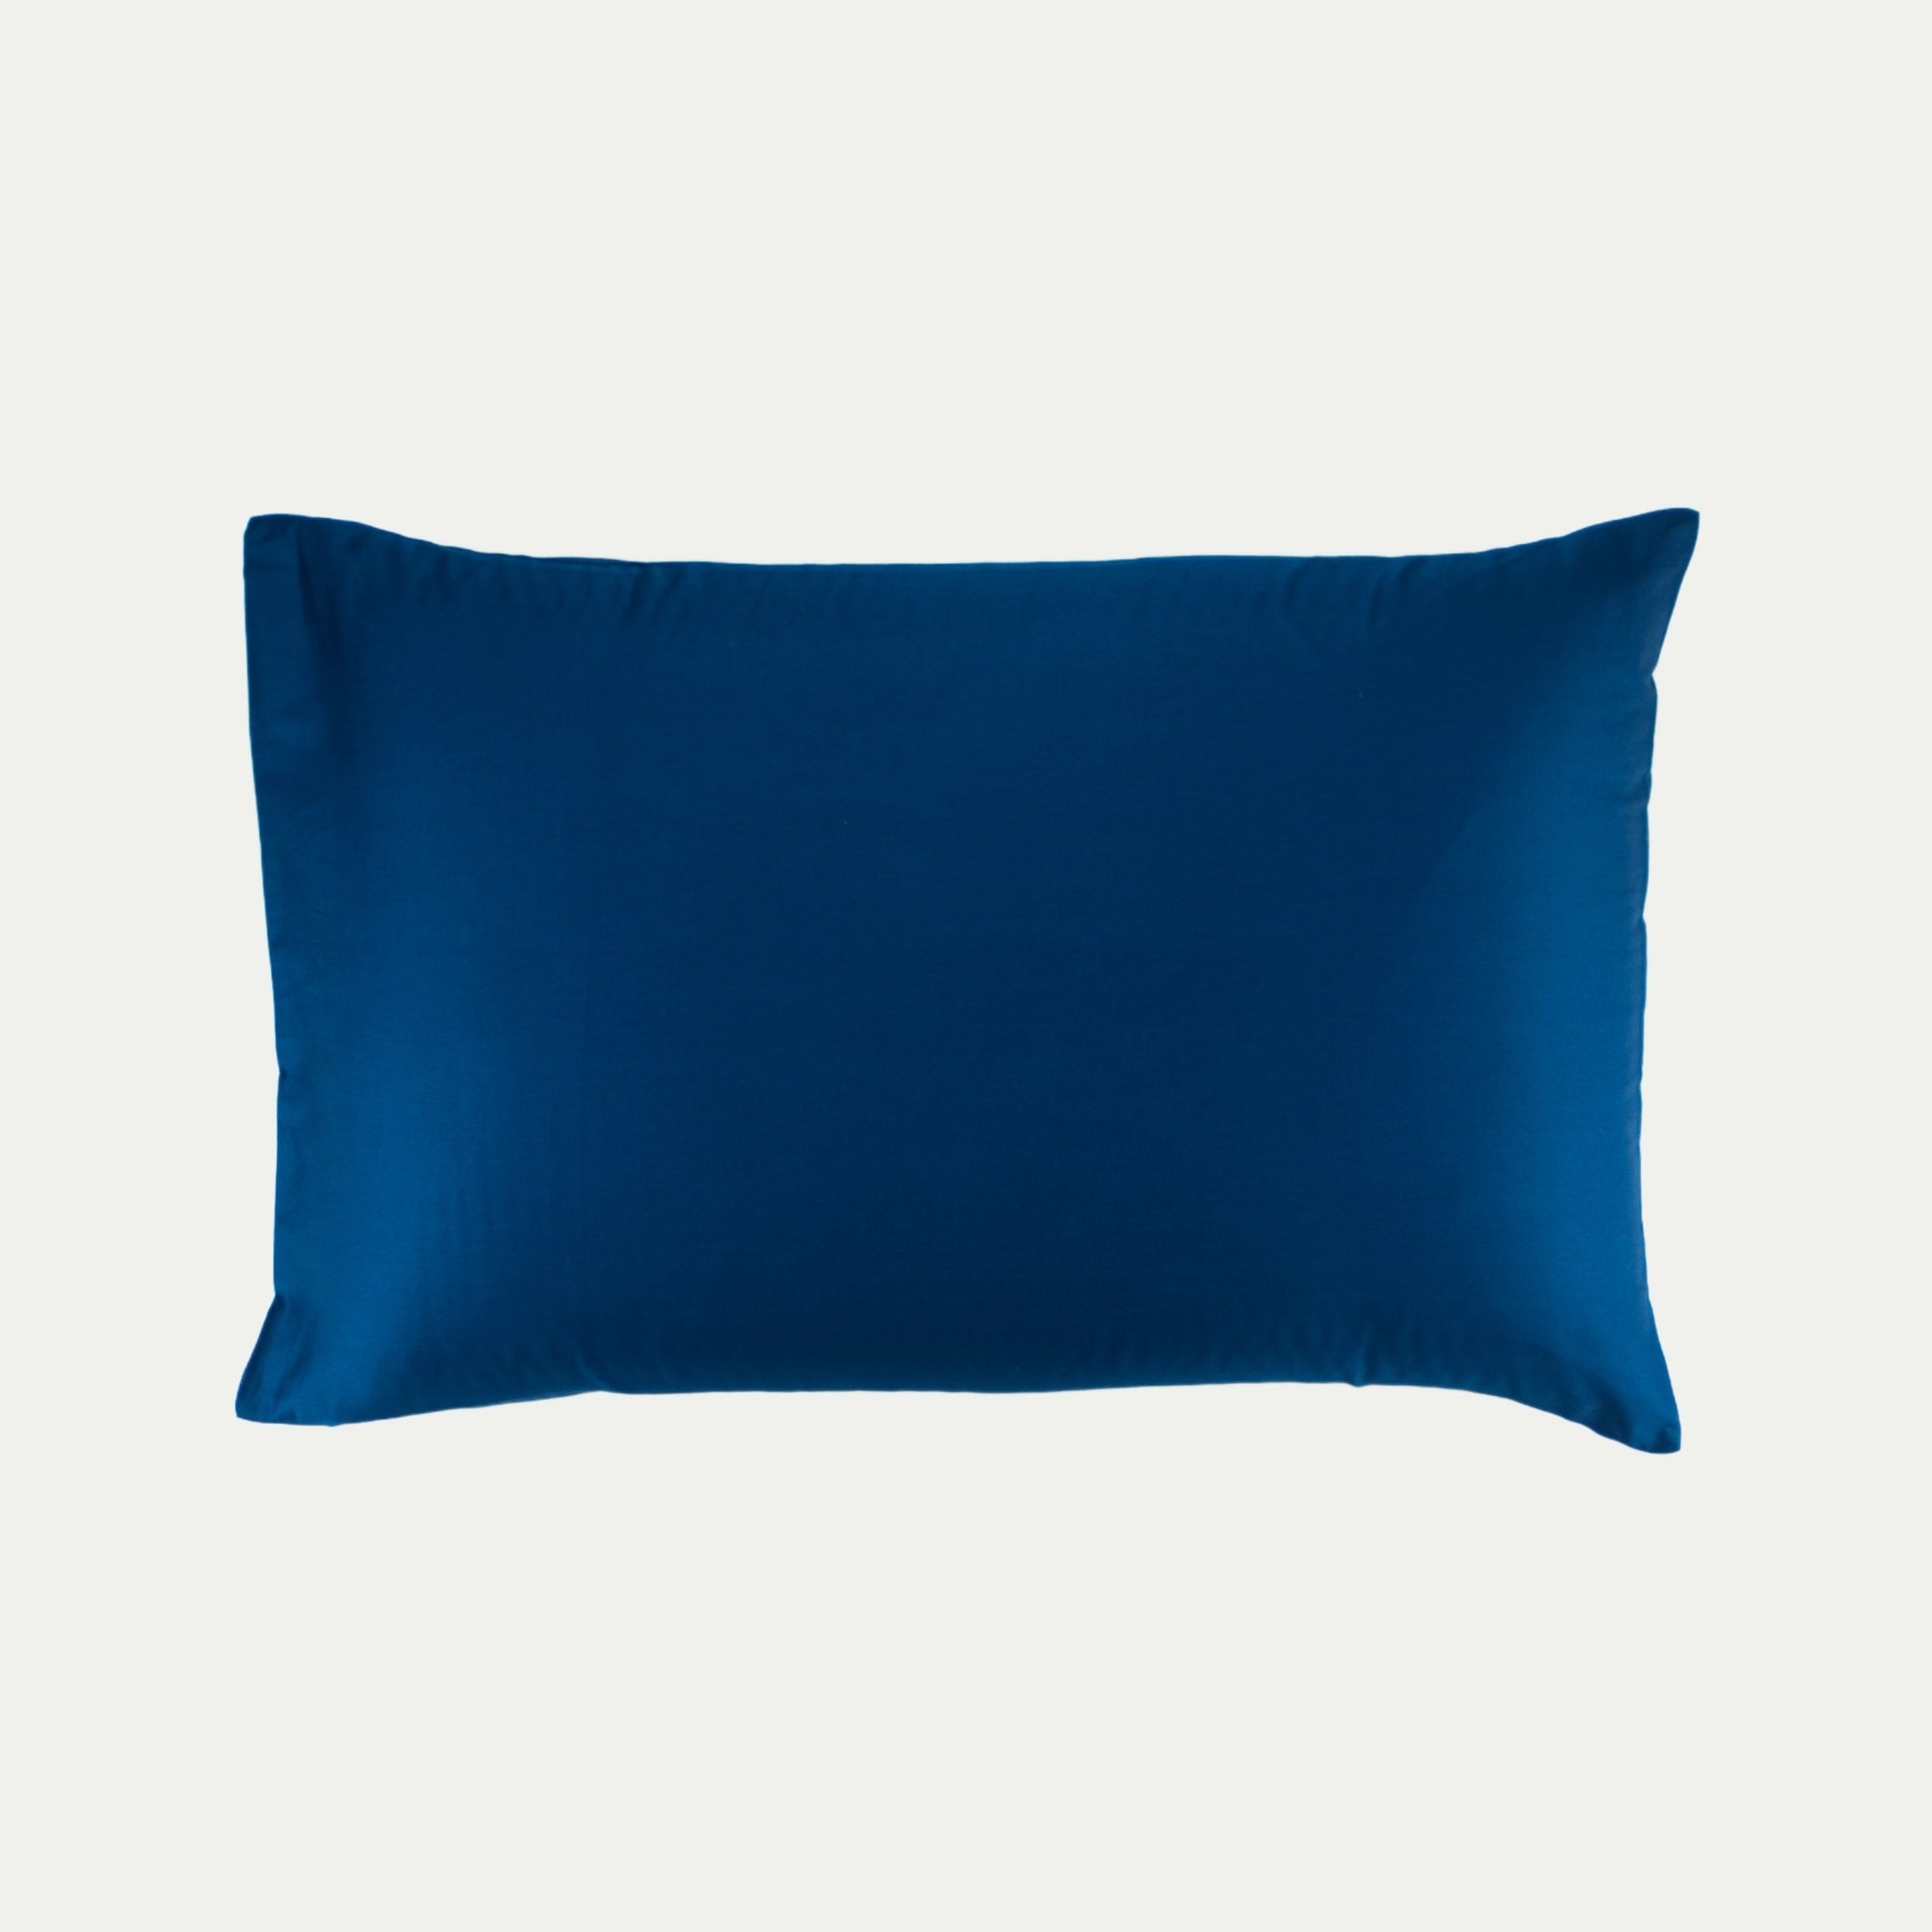 Organic cotton pillowcase in classic blue